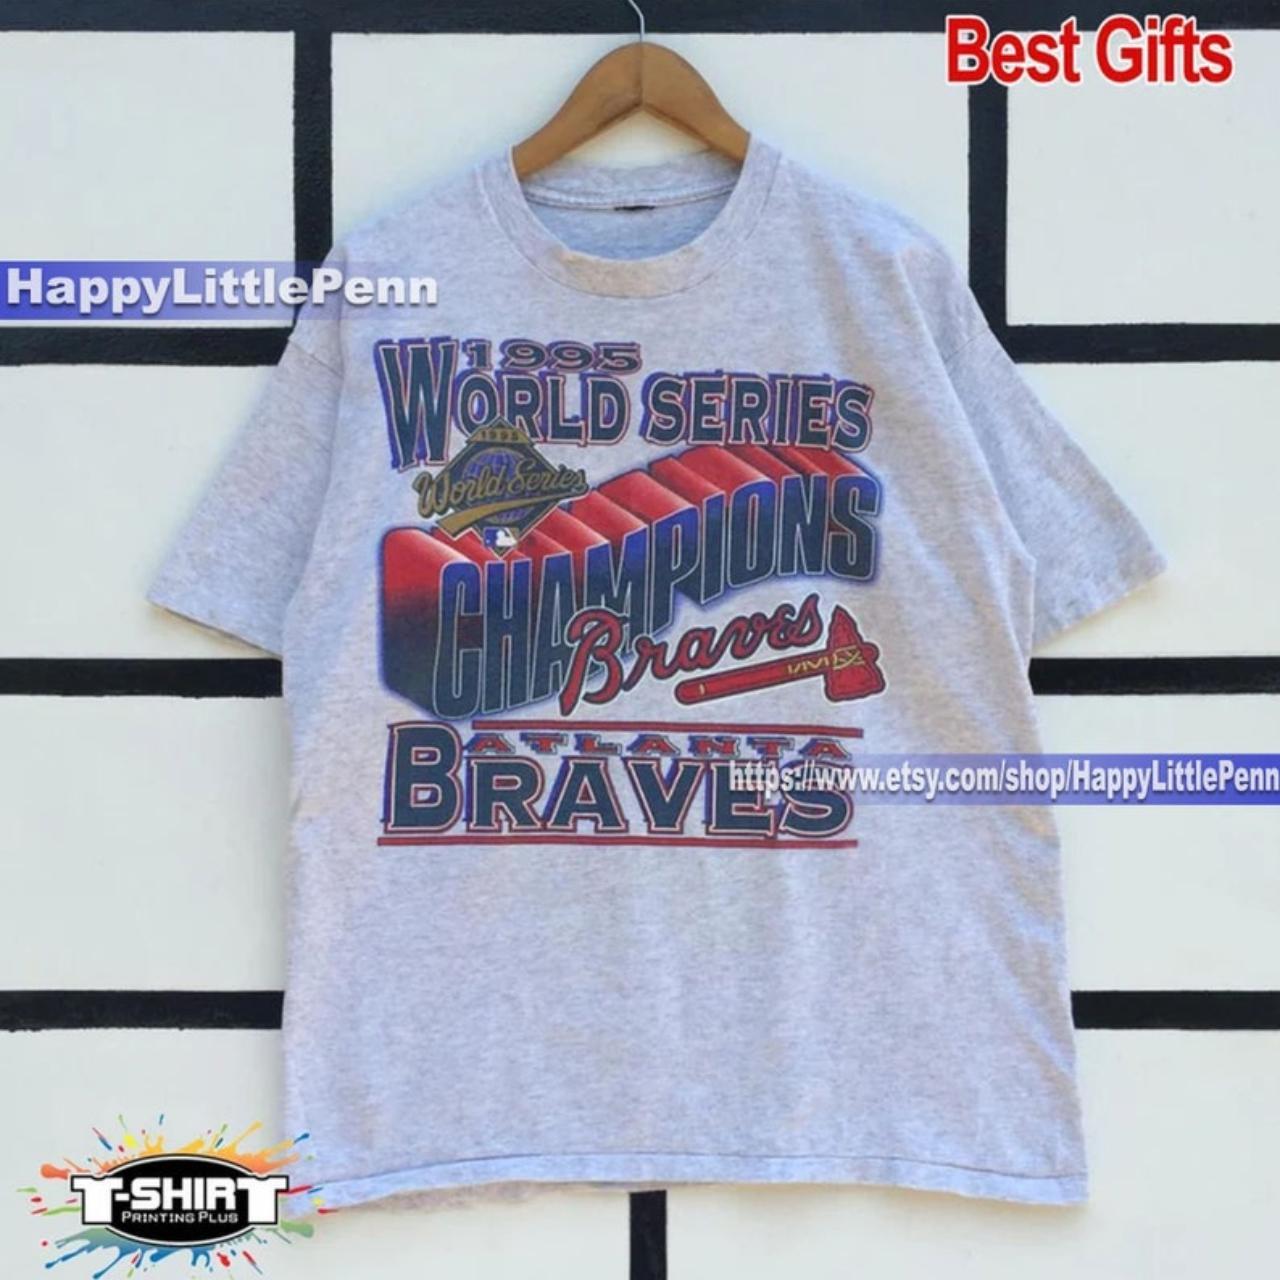 Atlanta Braves 1995 World Series Champi0ns MLB Shirt Vintage Men Gift Tee